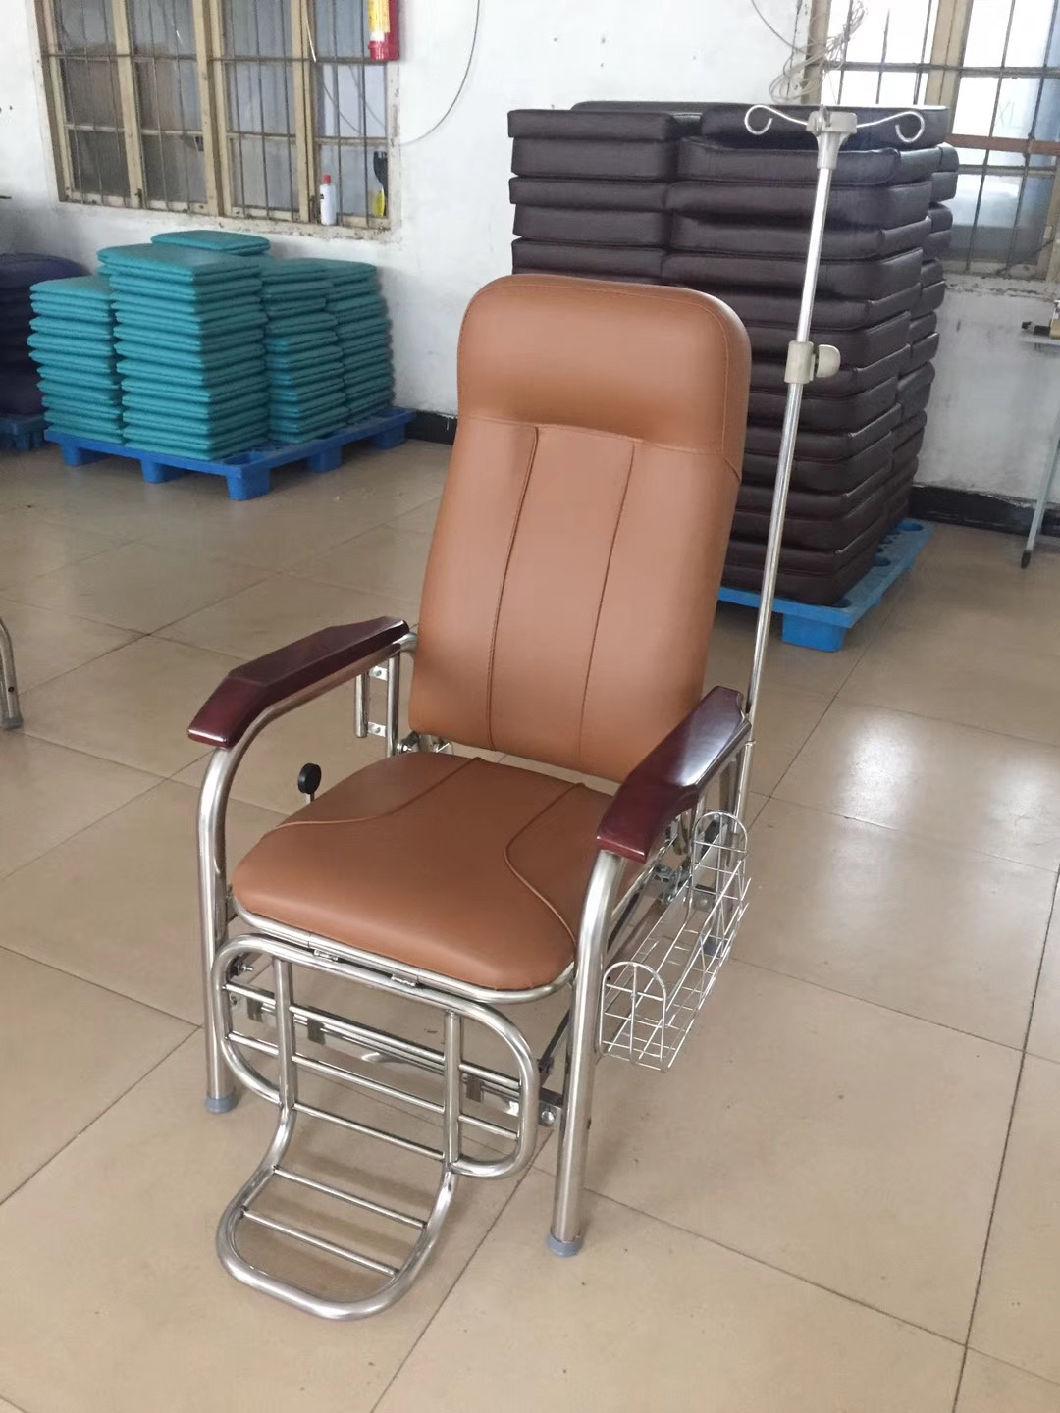 Mn-Syy001 Top Quality Hospital Use Medical Transfusion Chair